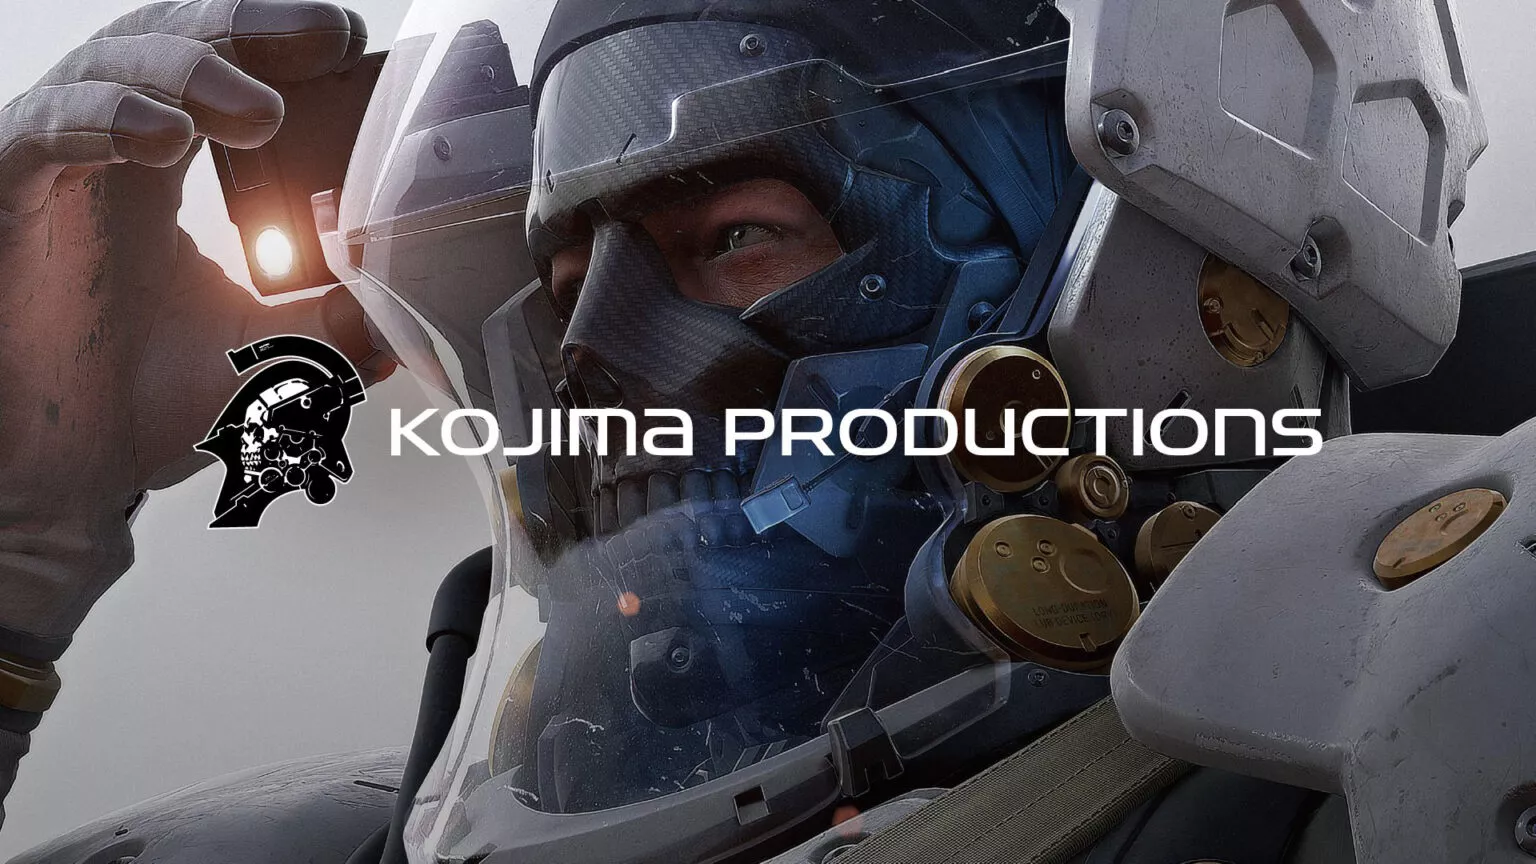 Gerücht: Kojima Productions arbeitet an Horror-Spiel 'Overdose' Heropic